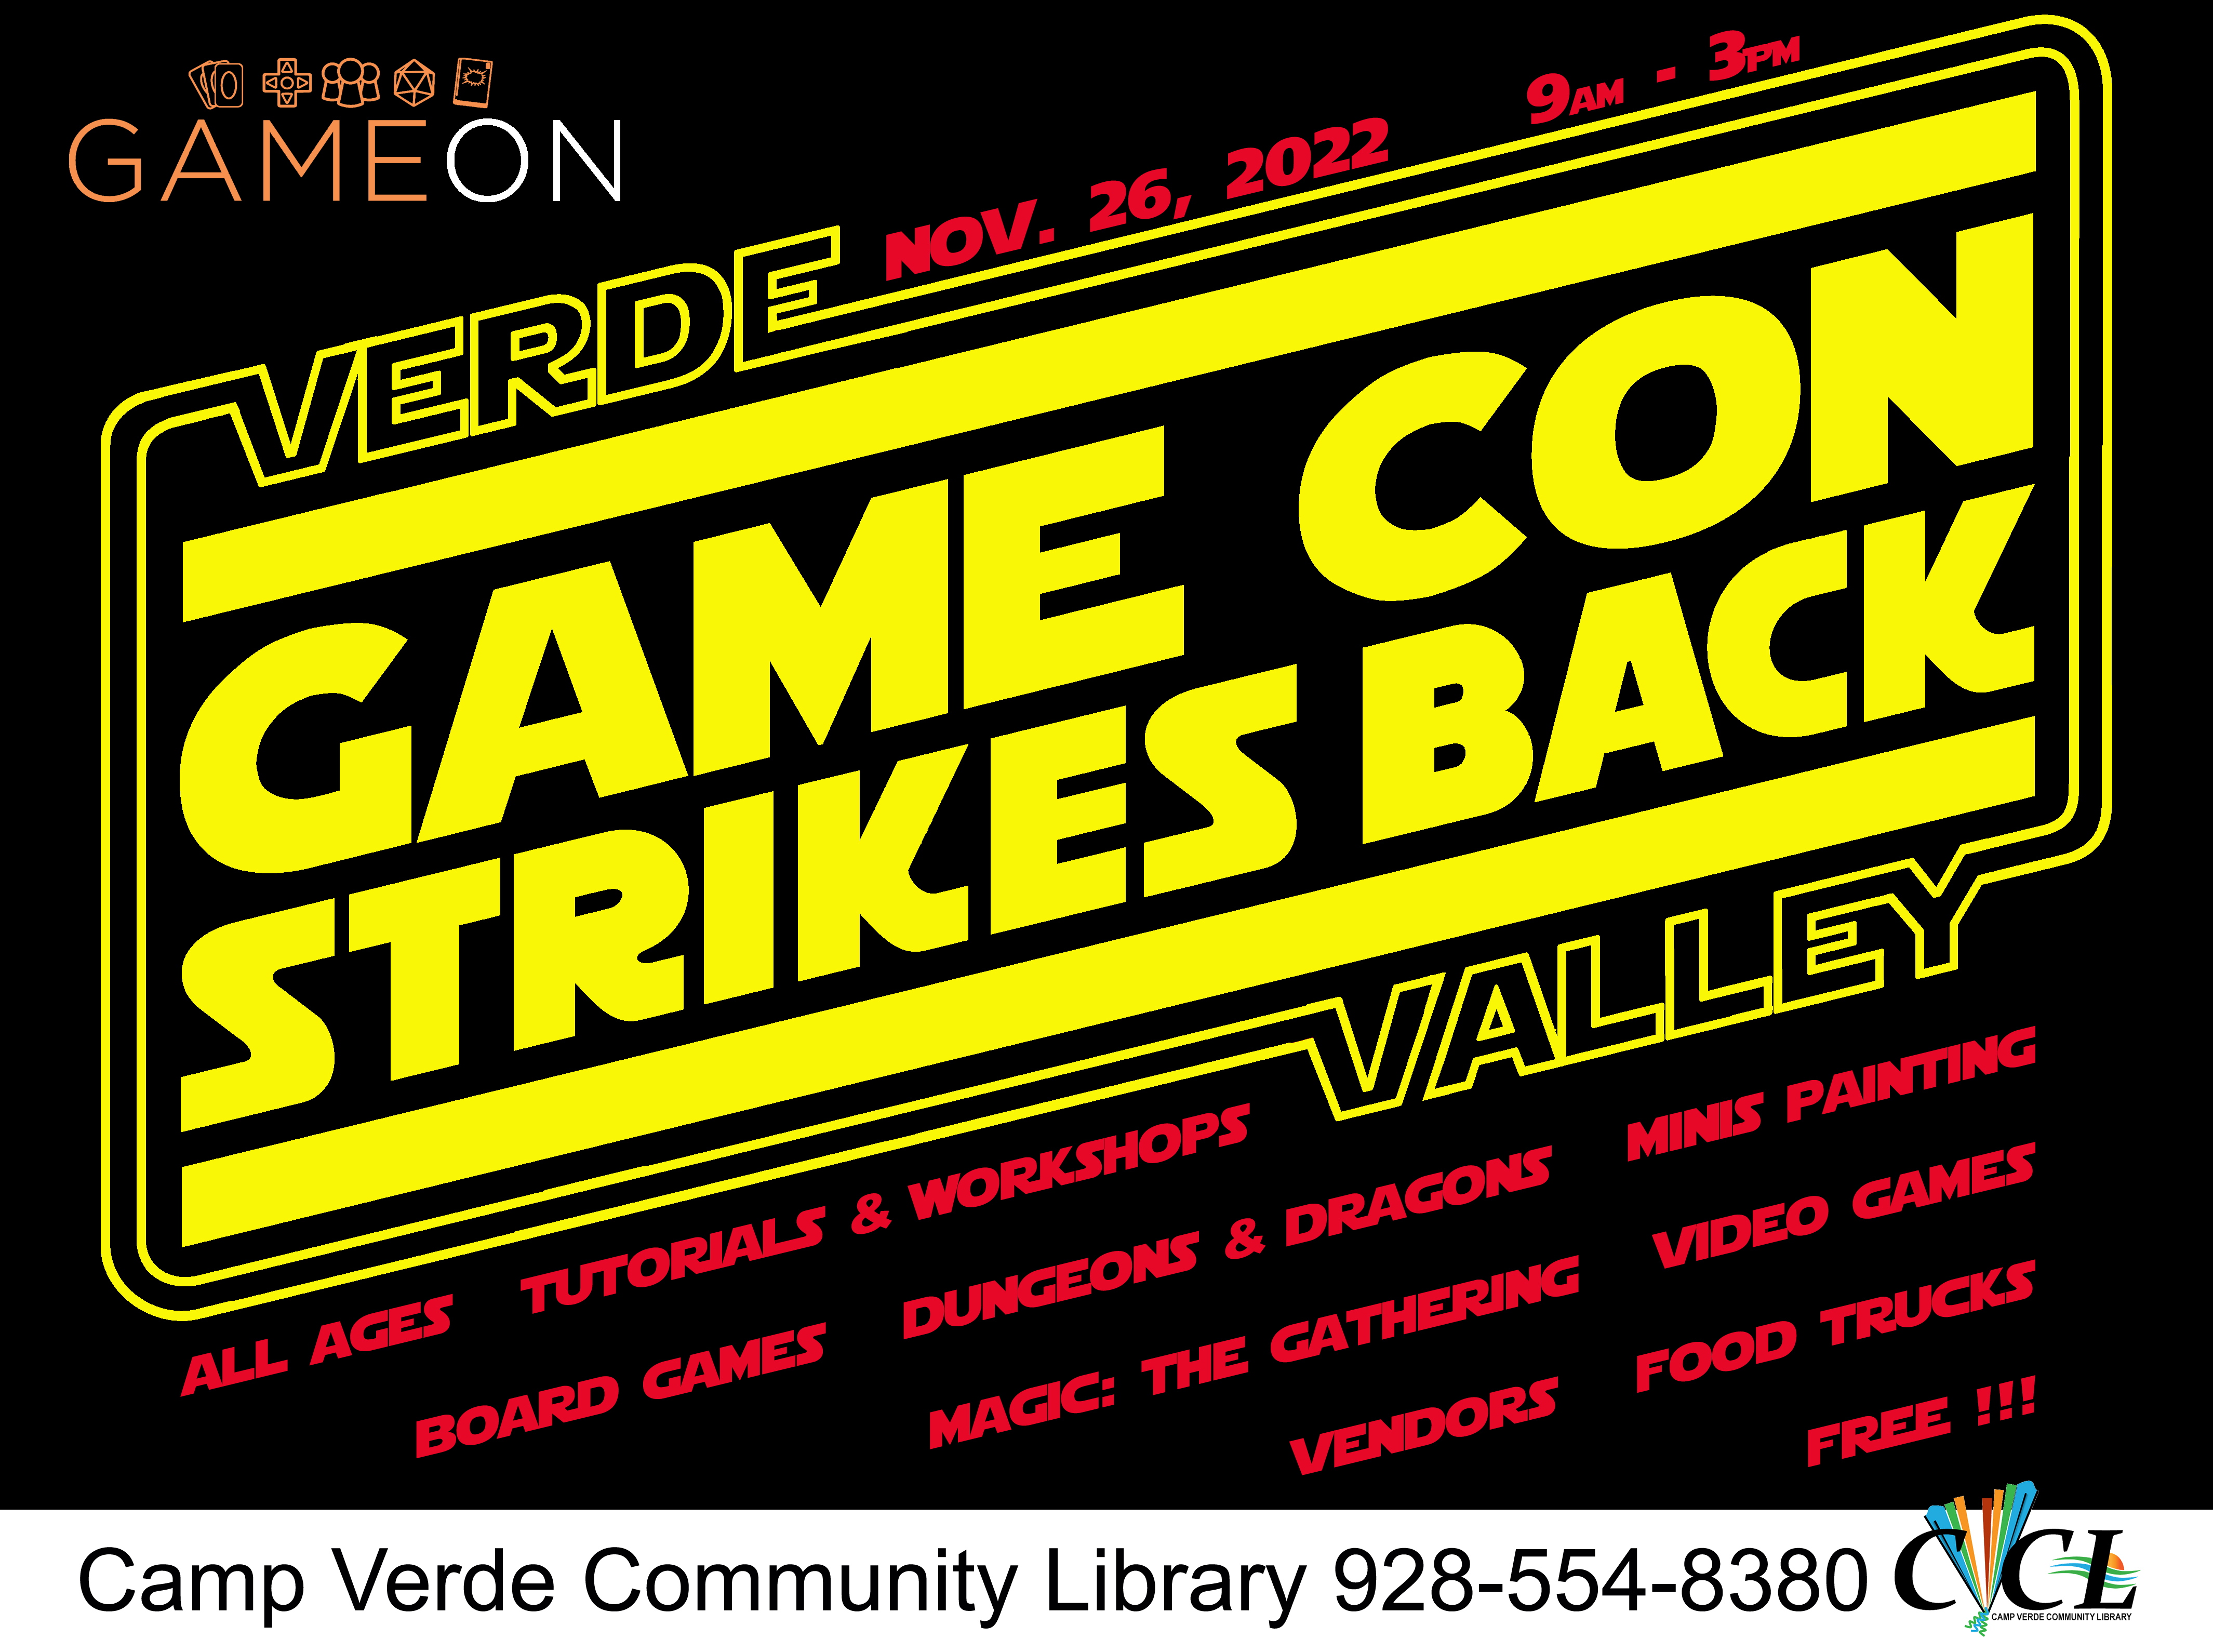 Game Con flyer